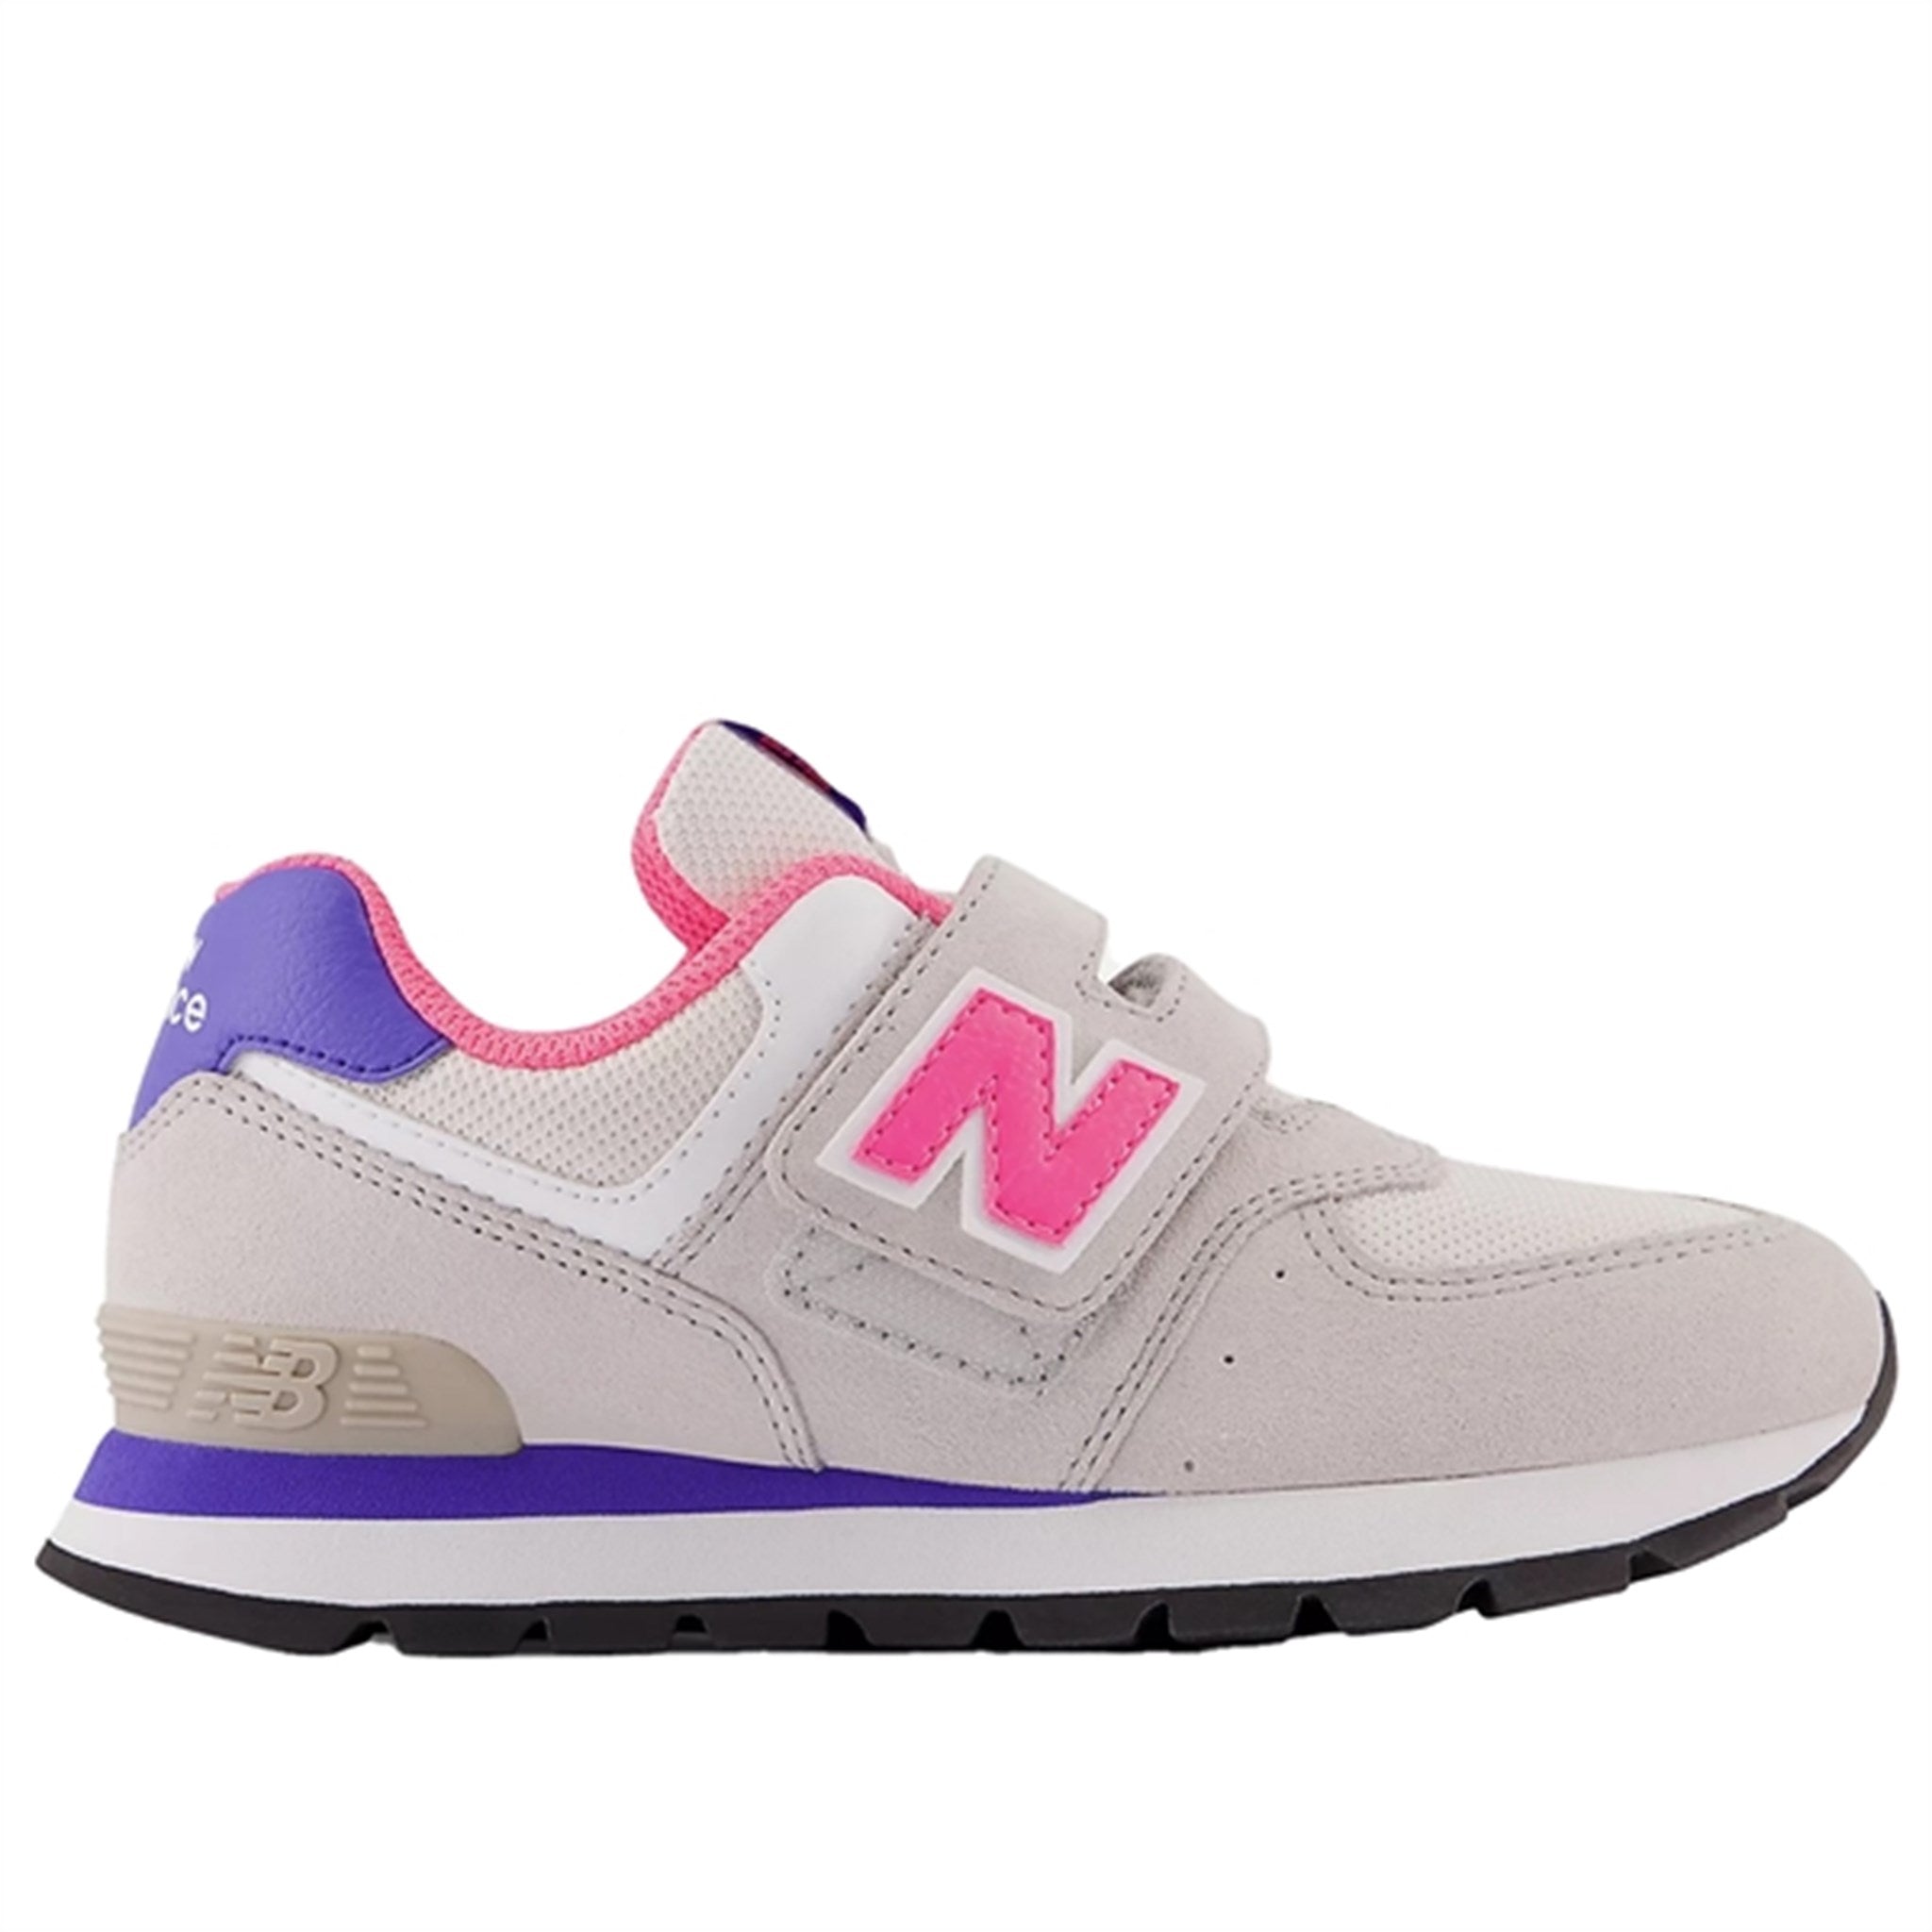 New Balance 574 Summer Fog/Neon Pink Sneakers